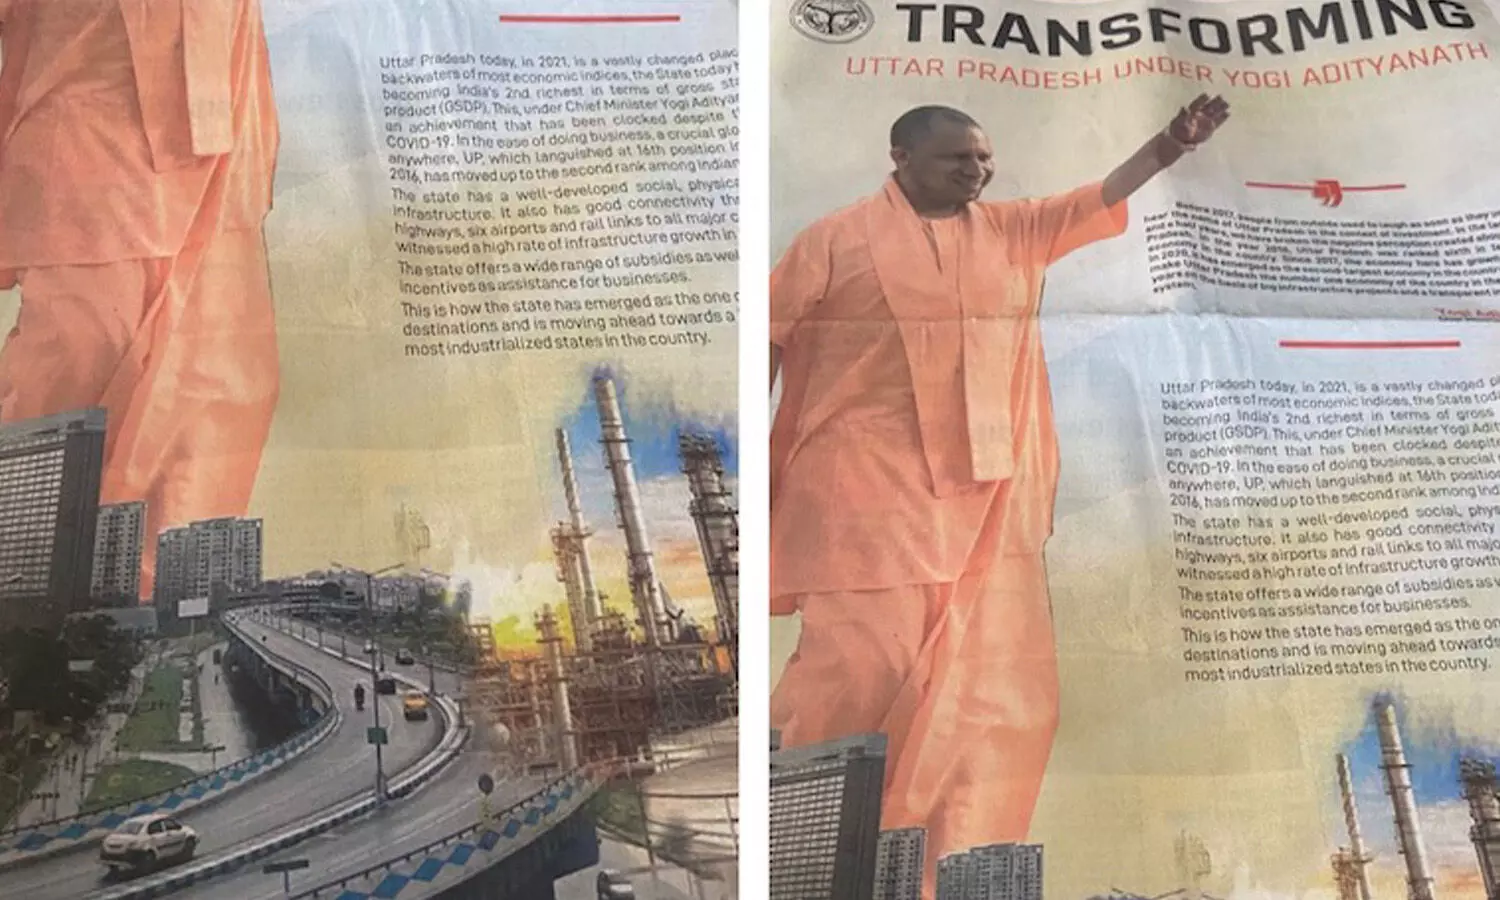 Transforming UP ad with Kolkata flyover image sparks fresh TMC-BJP row